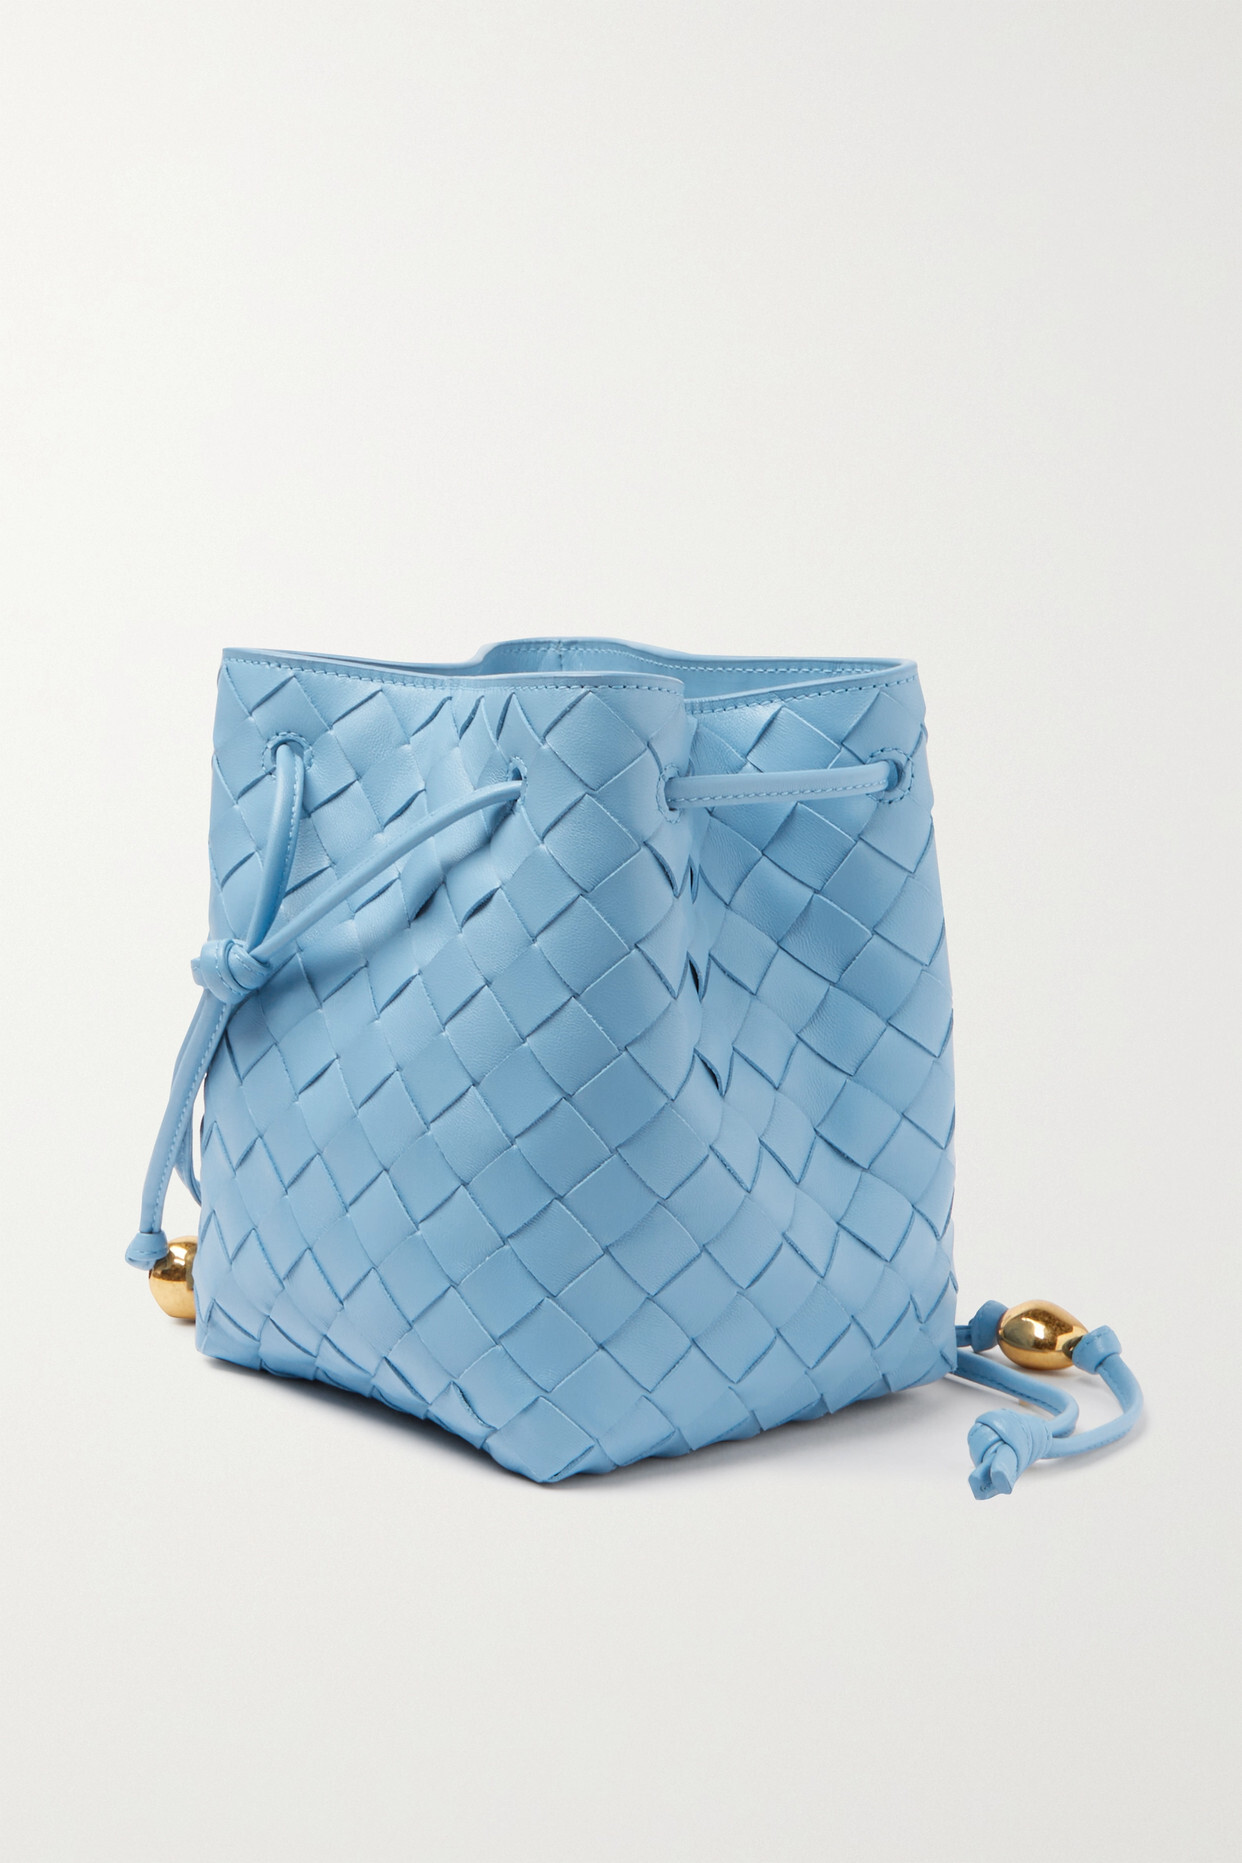 Bottega Veneta - Small Embellished Intrecciato Leather Bucket Bag - Blue